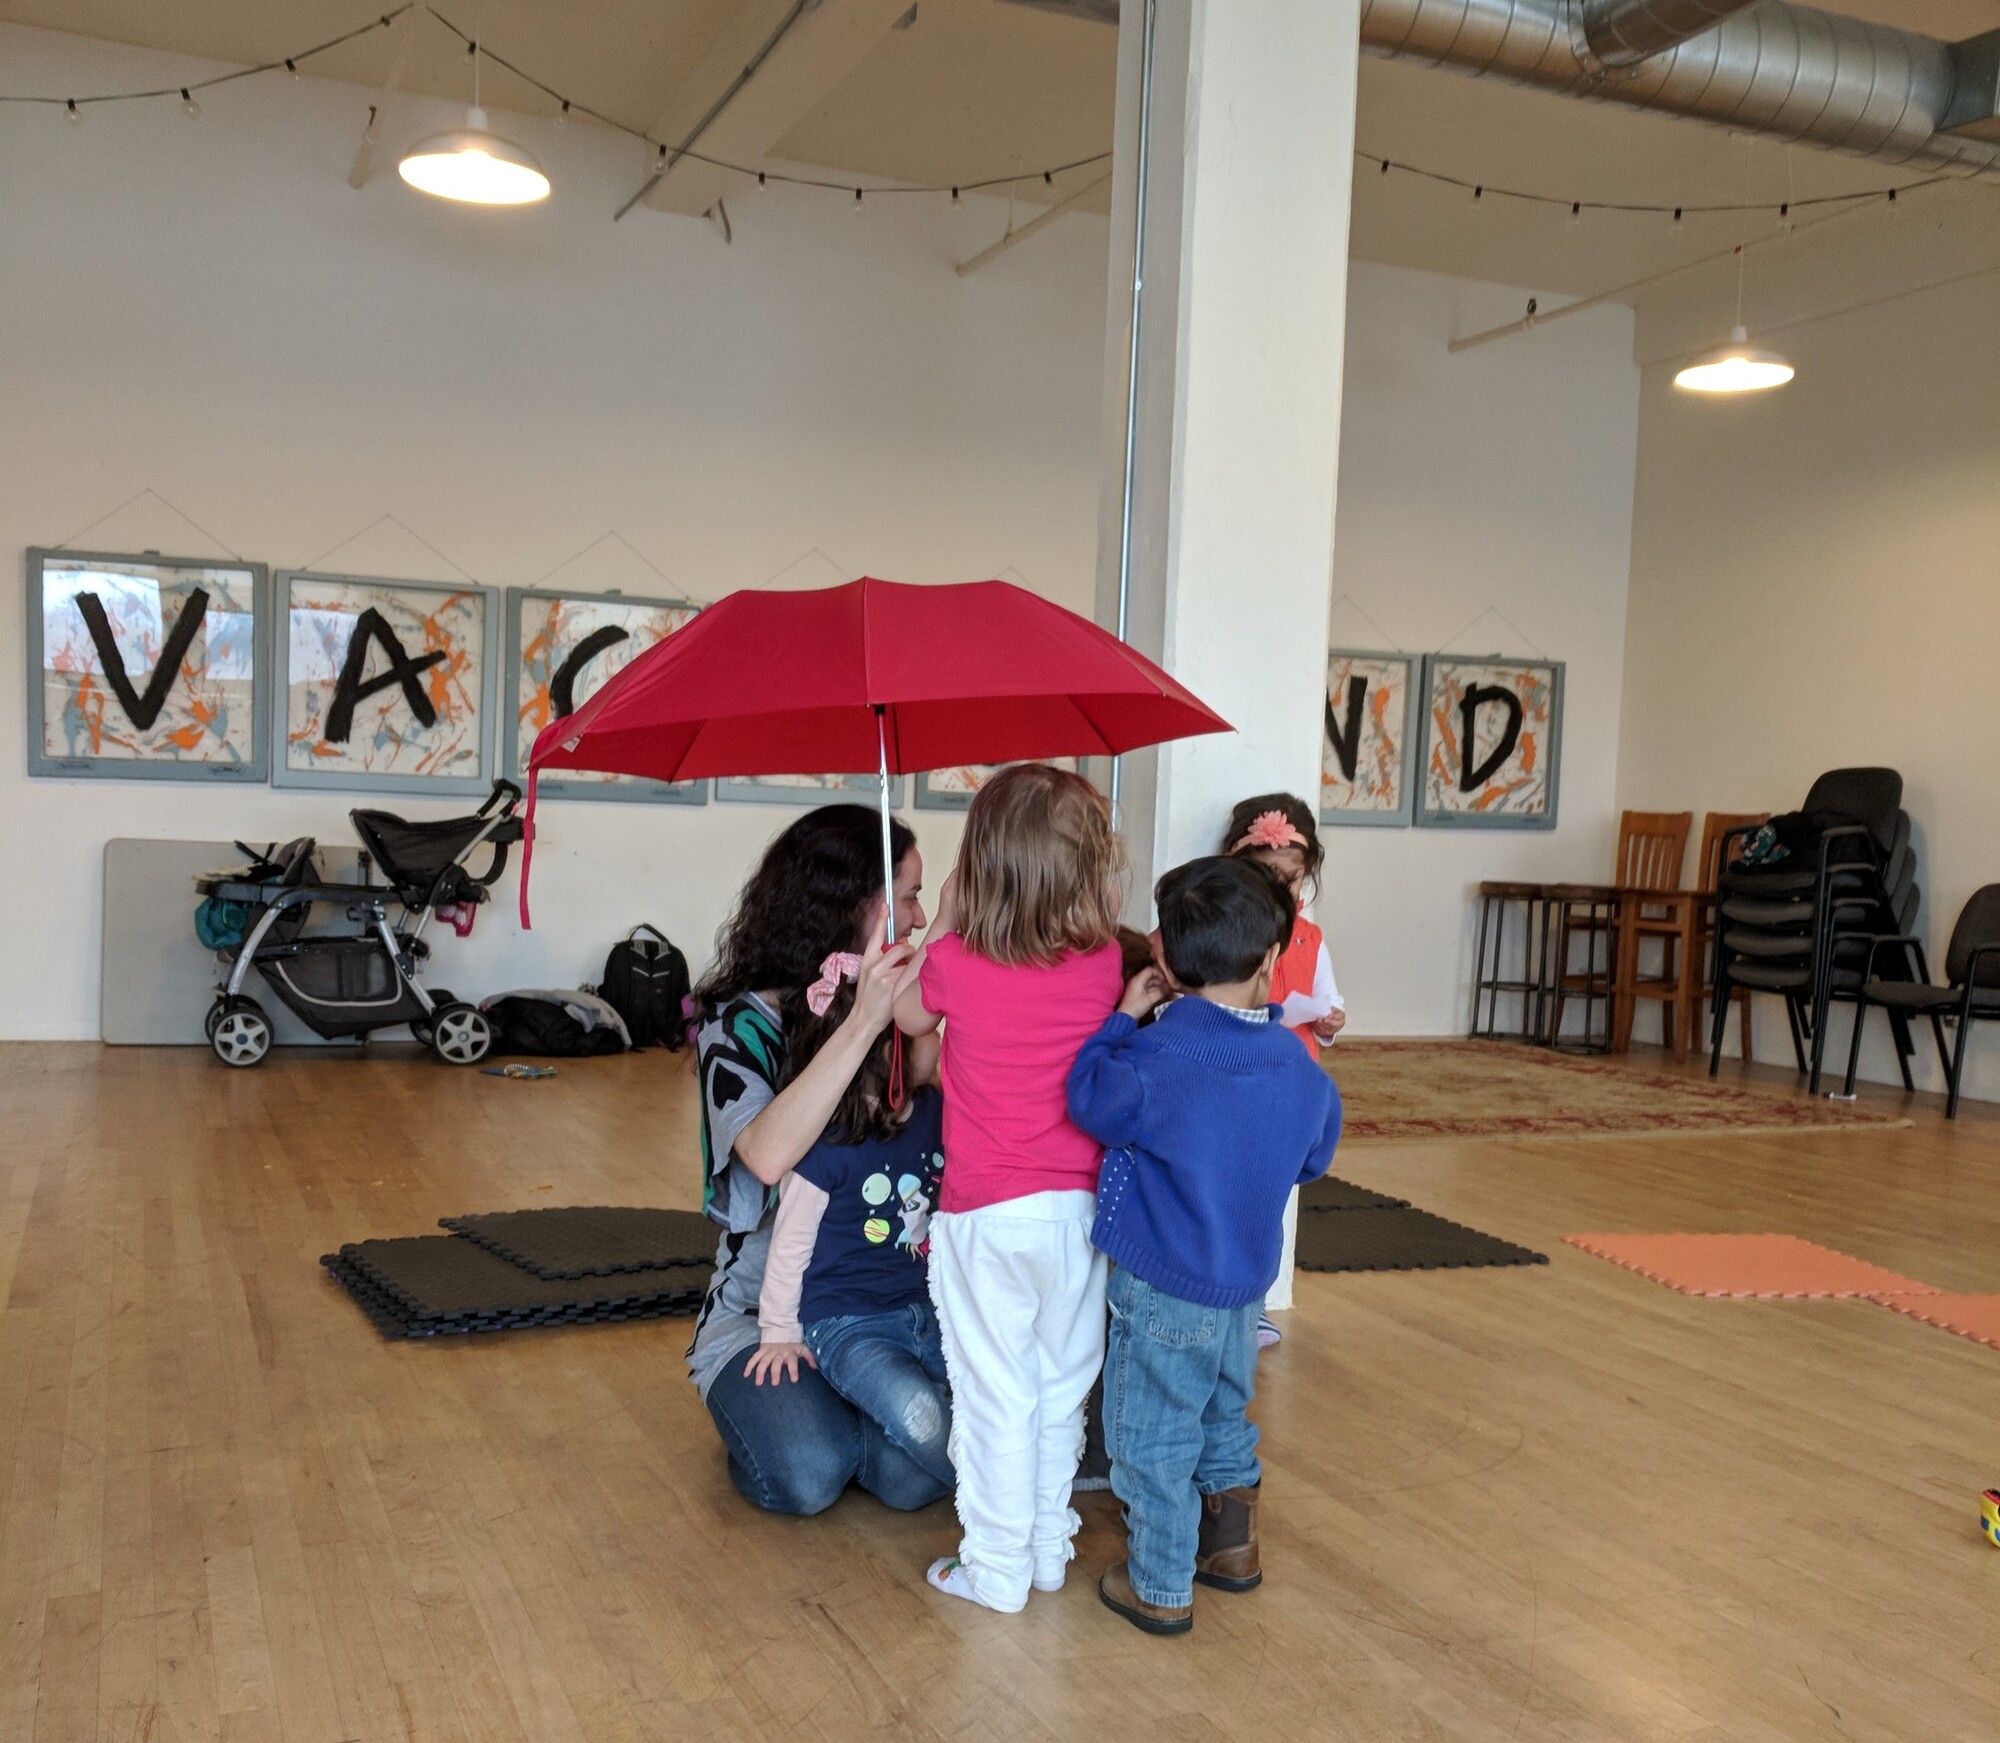 children standing under an umbrella